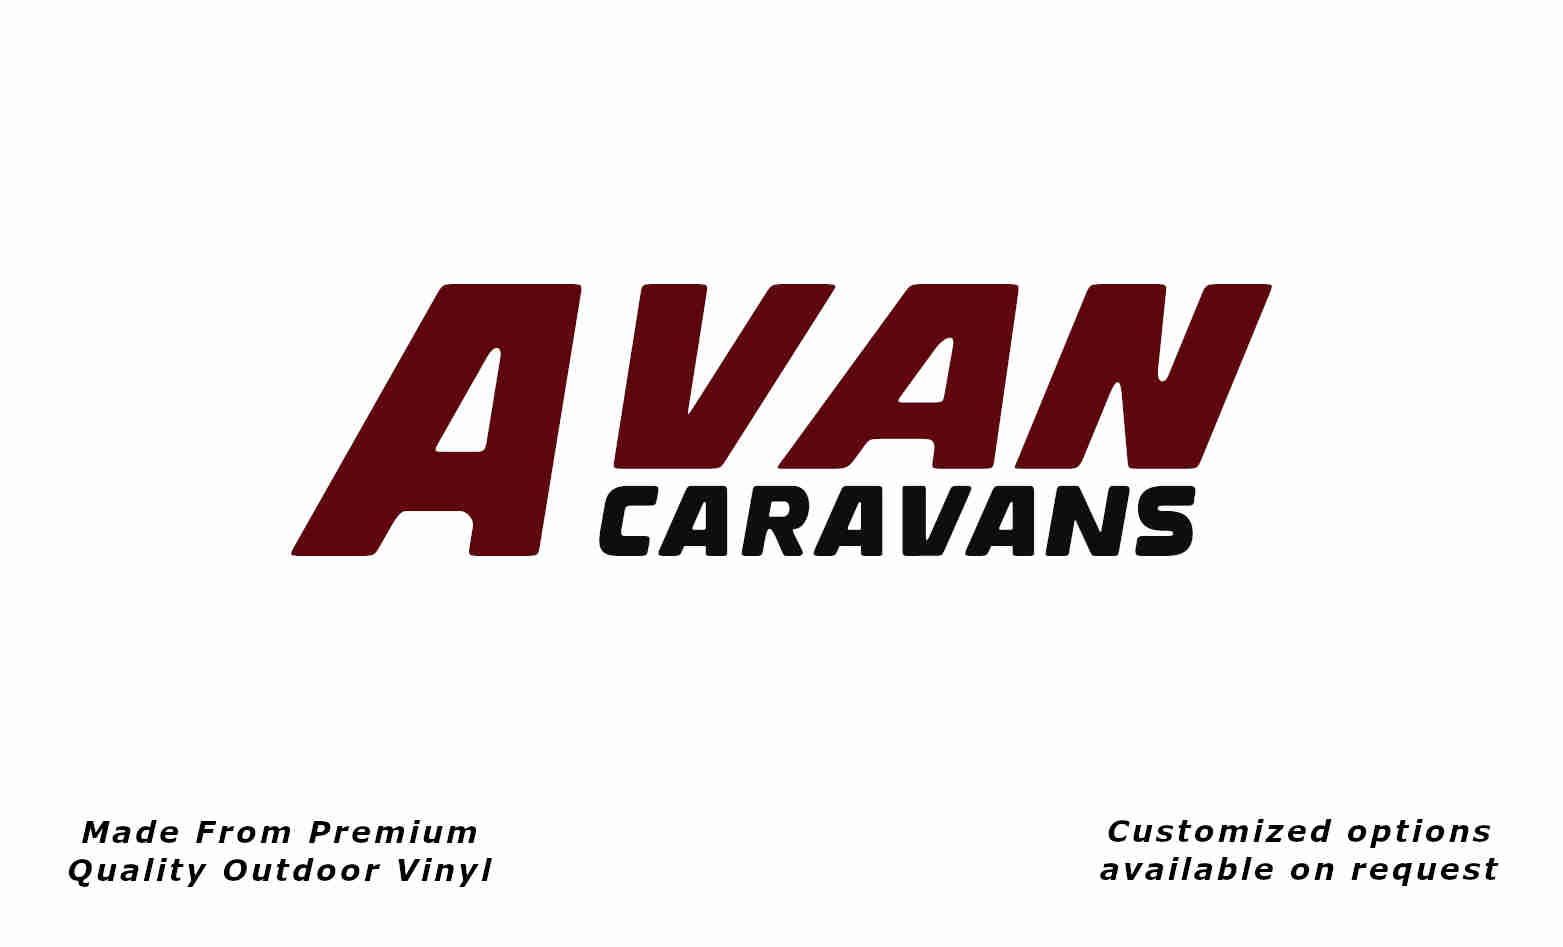 Avan caravans replacement vinyl decal sticker in purple red and black.